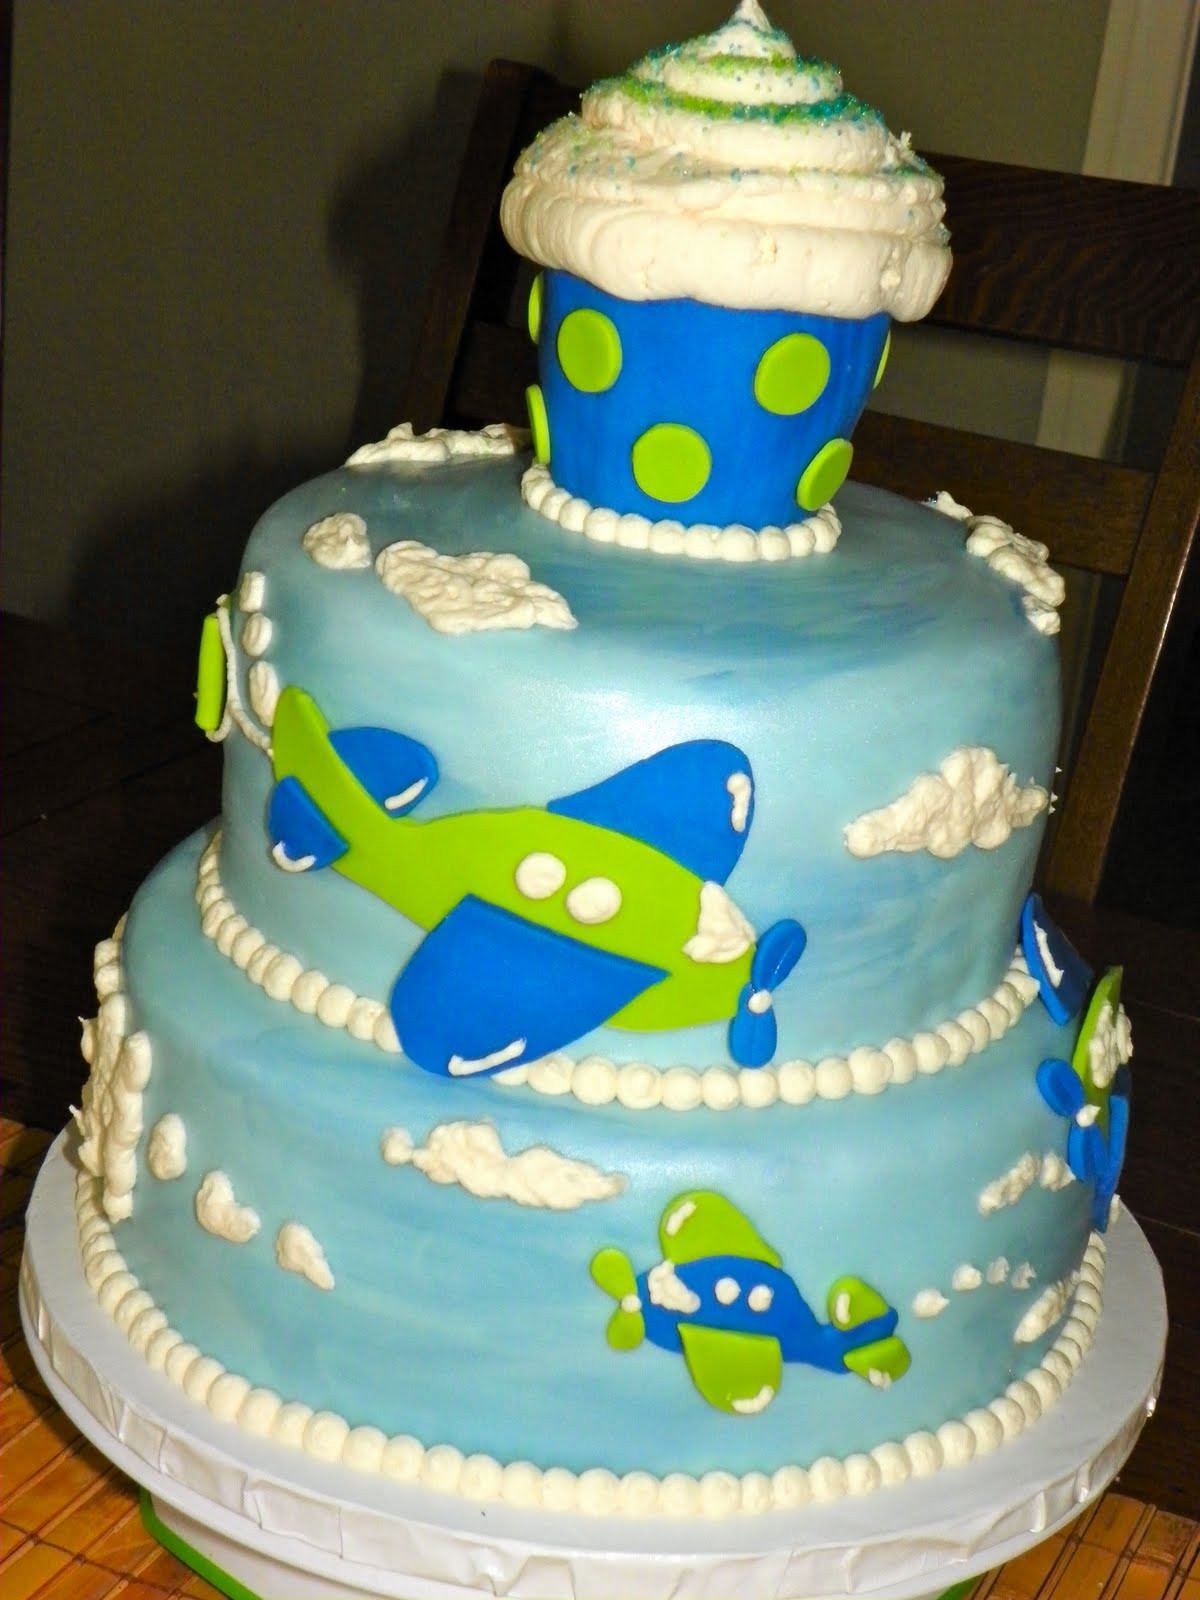 Airplane Birthday Cake
 Plumeria Cake Studio Airplane Birthday Cake